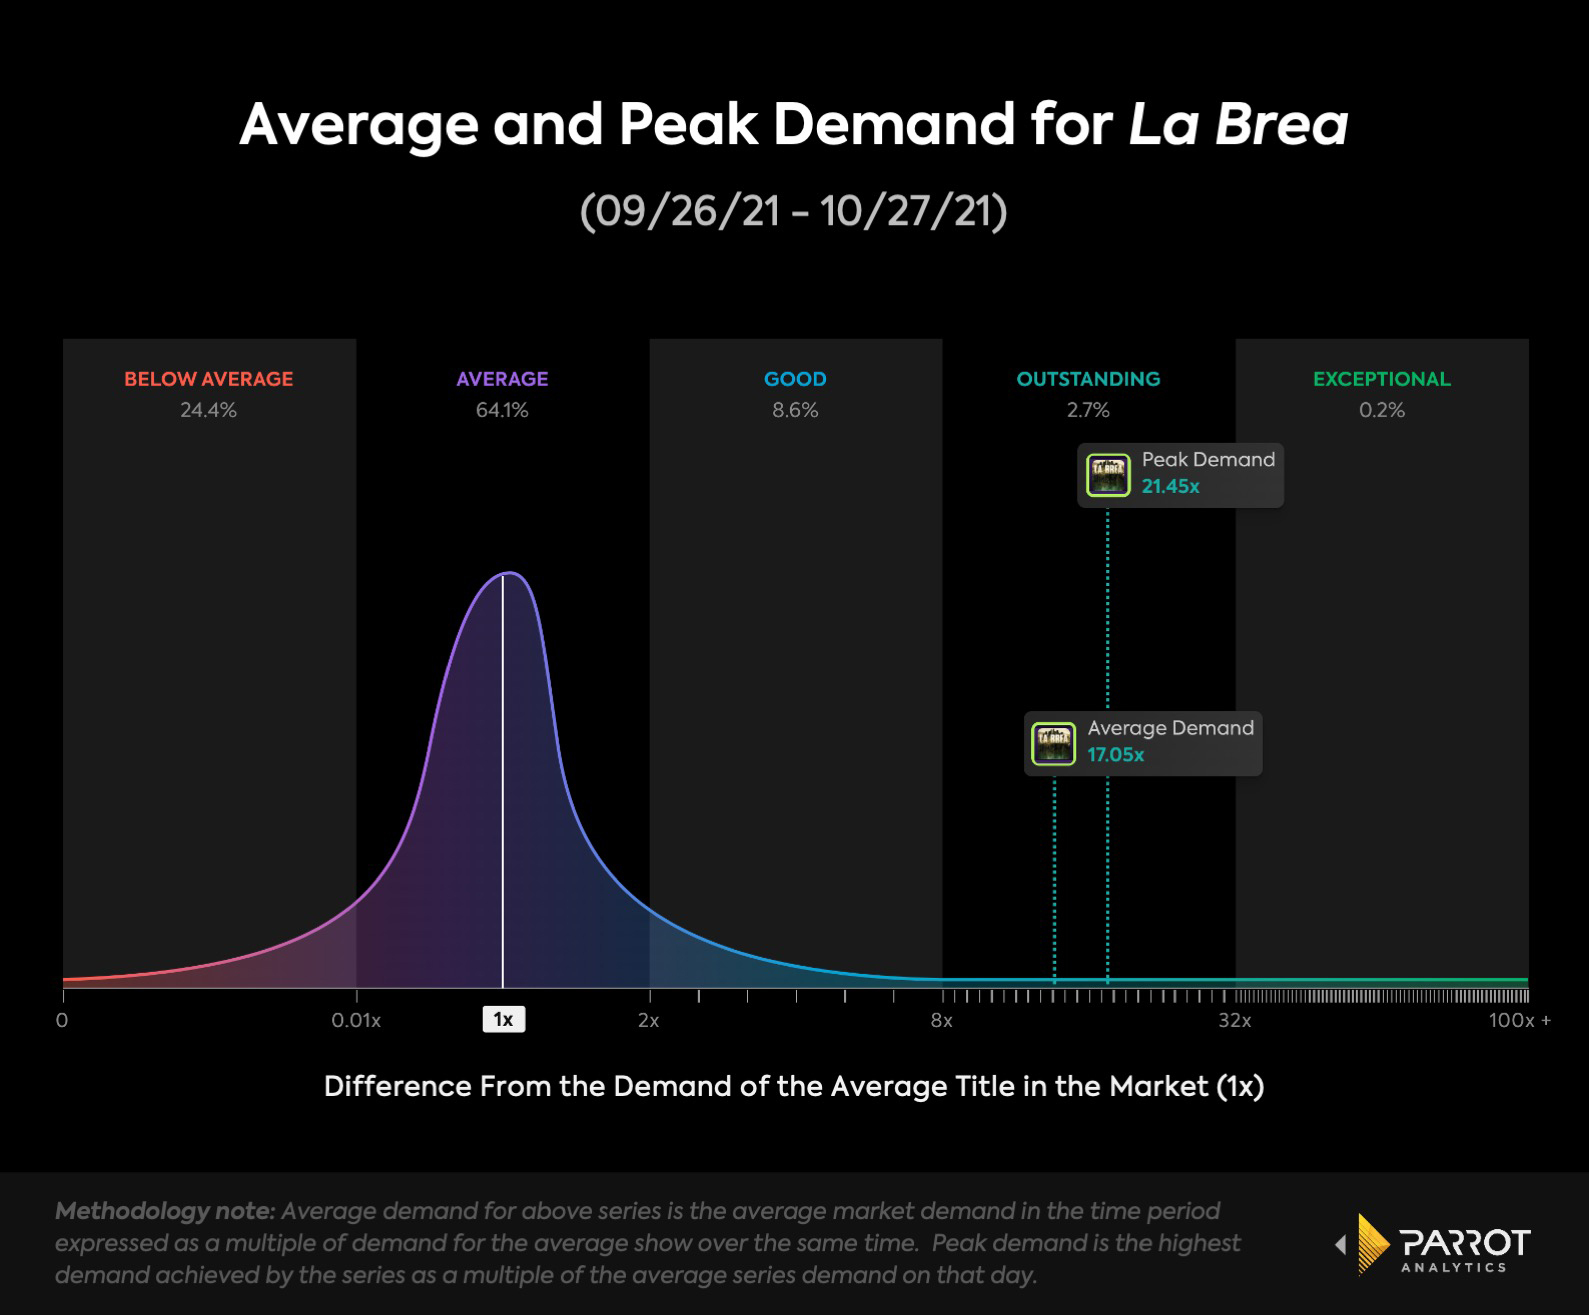 Parrot_Average and Peak Demand for La Brea_1.jpg